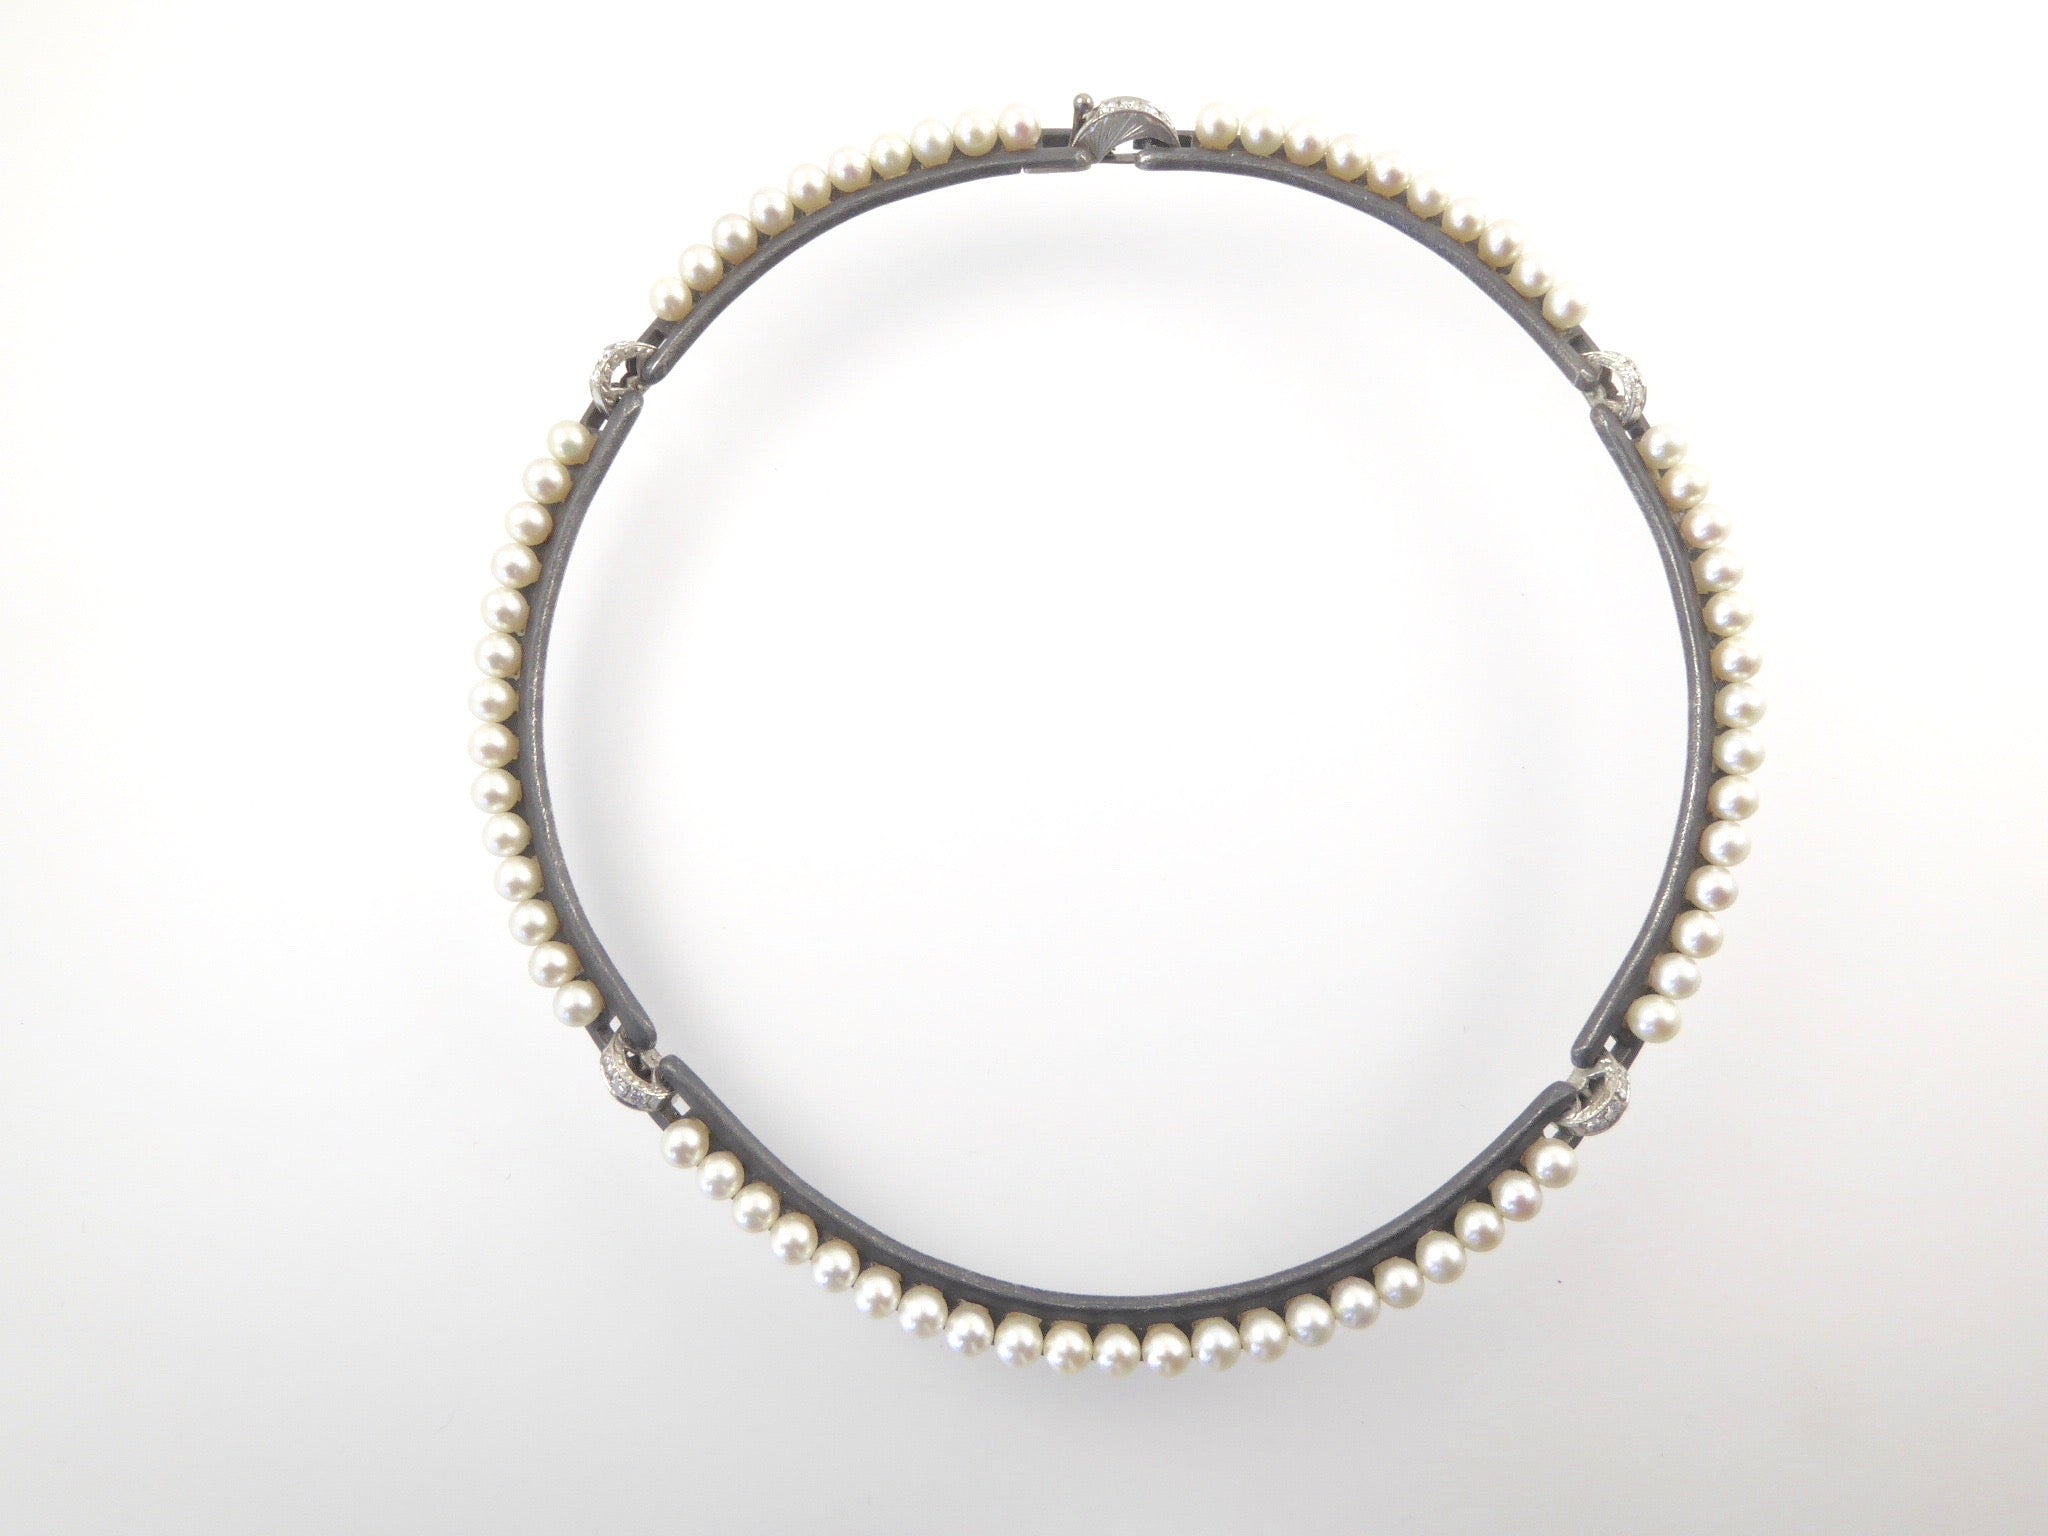 Marsh pearl diamond necklace